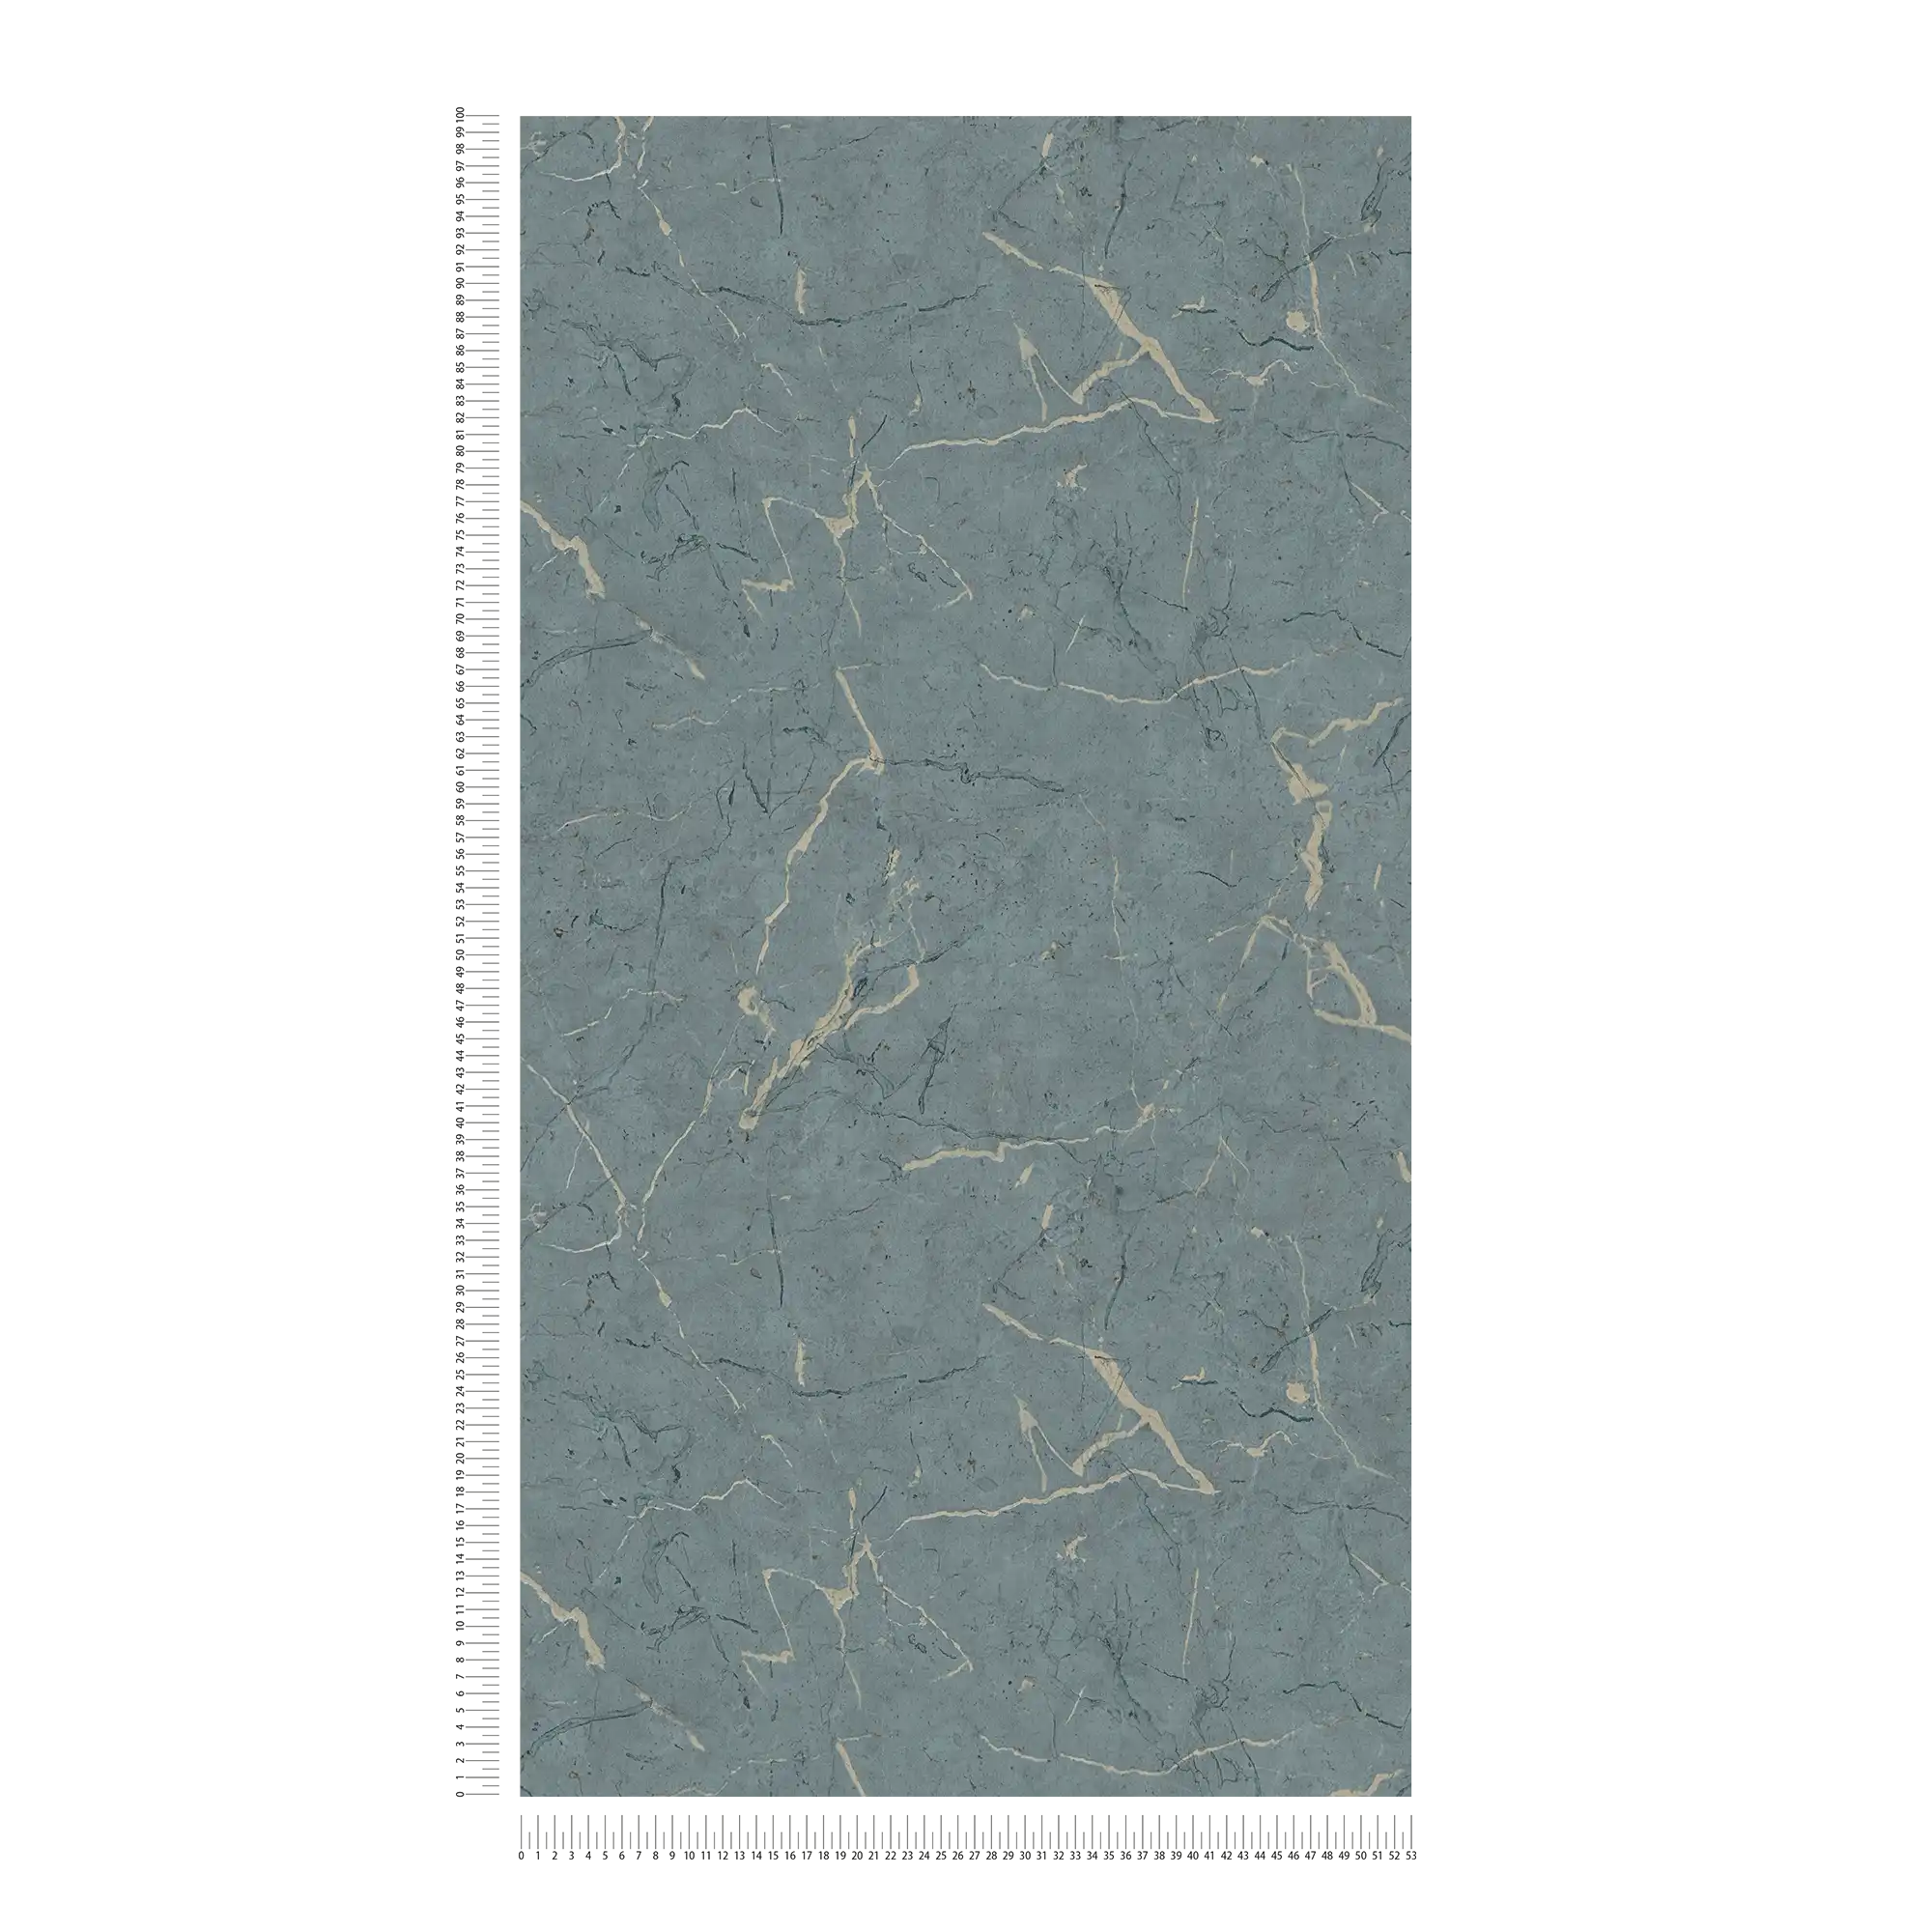             Tapete Marmor Mintgrün mit Glanz-Effekt – Blau, Creme, Grün
        